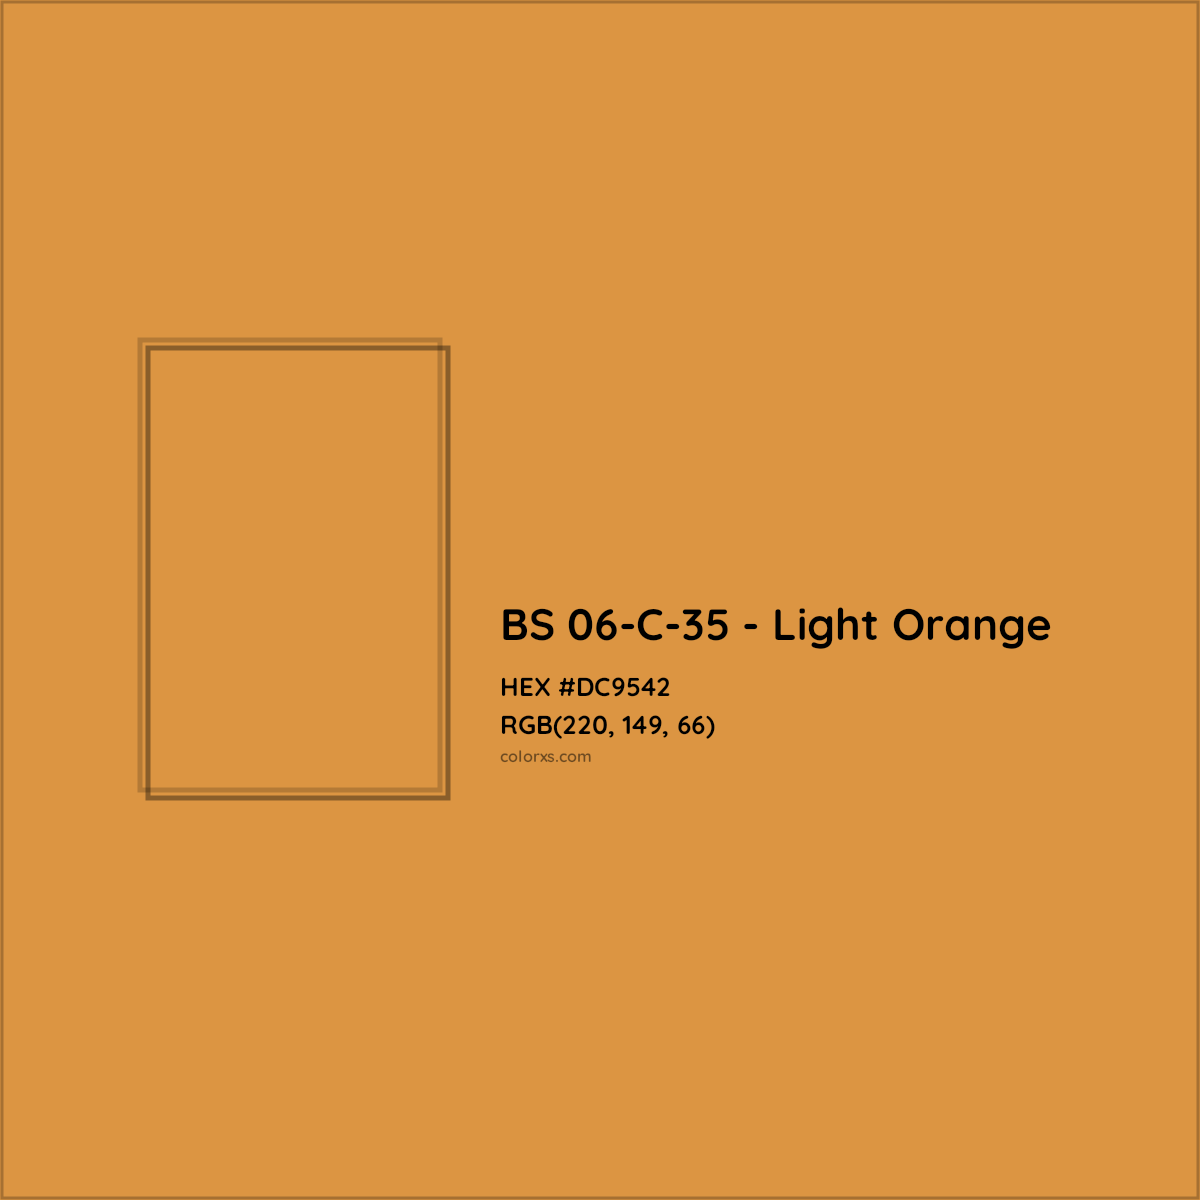 HEX #DC9542 BS 06-C-35 - Light Orange CMS British Standard 4800 - Color Code